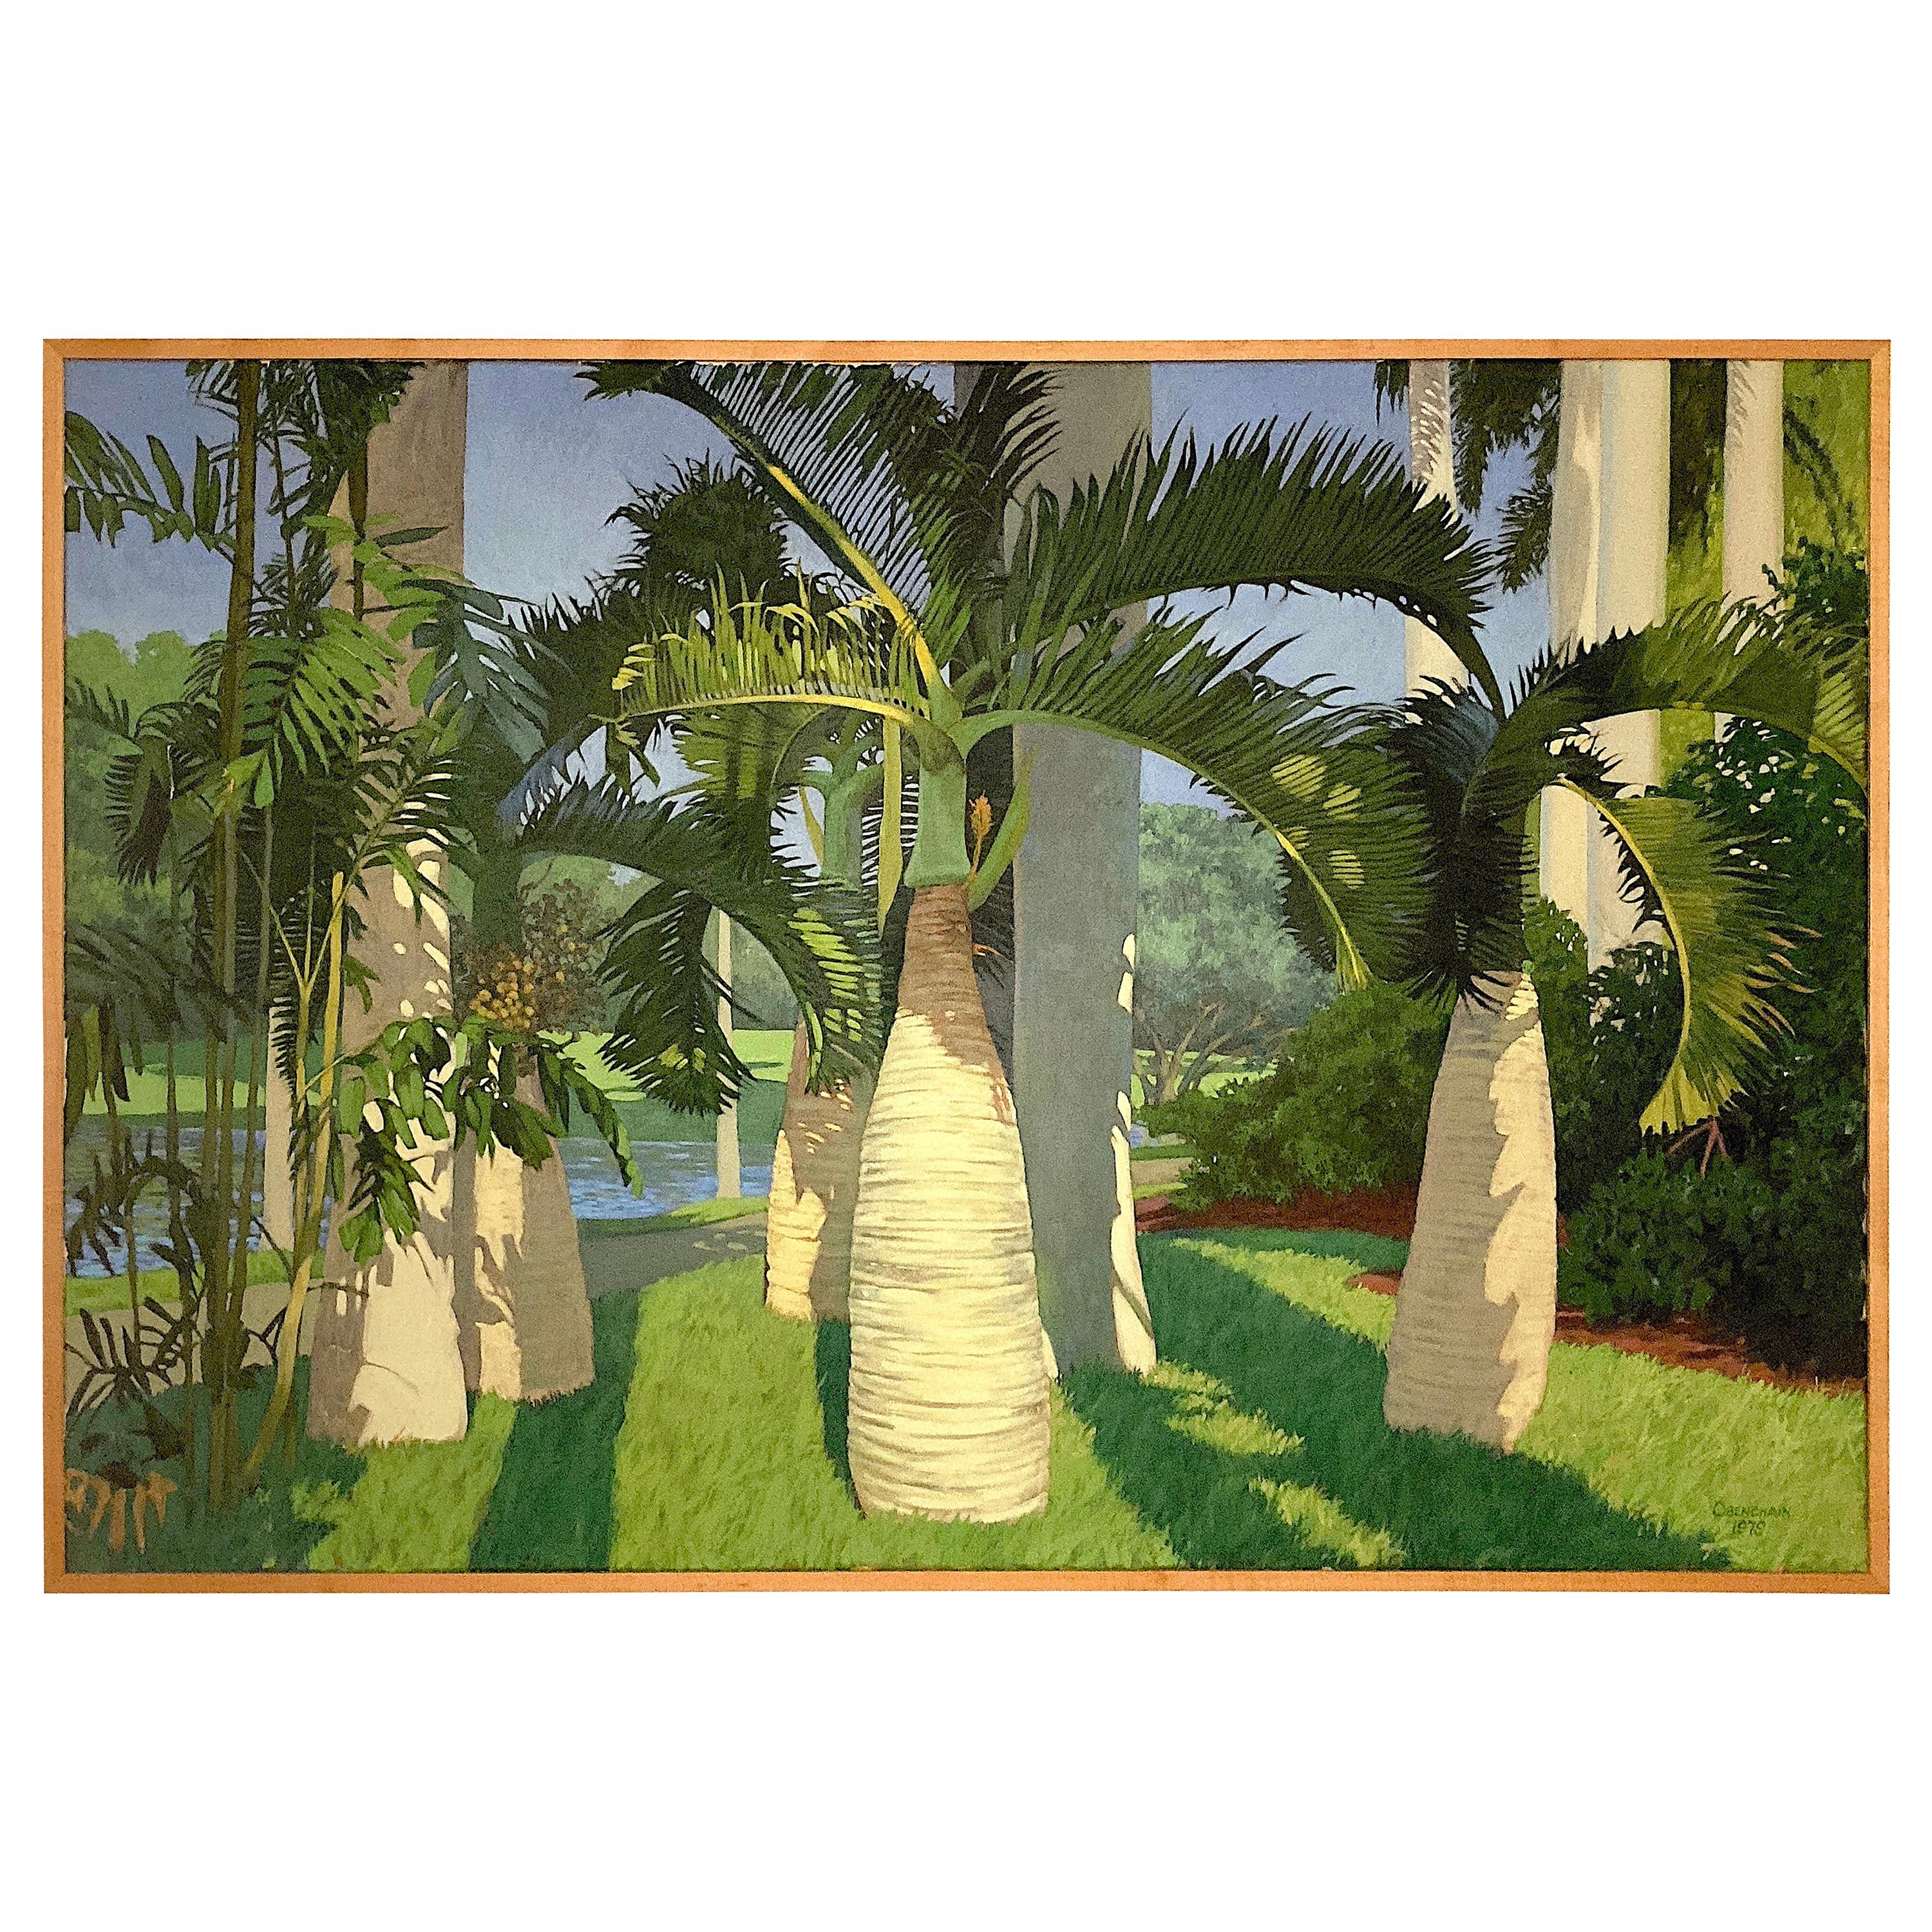 Bottle Palms, Oasis, Oil on Canvas, Richard 'Dick' Obenchain, 1979